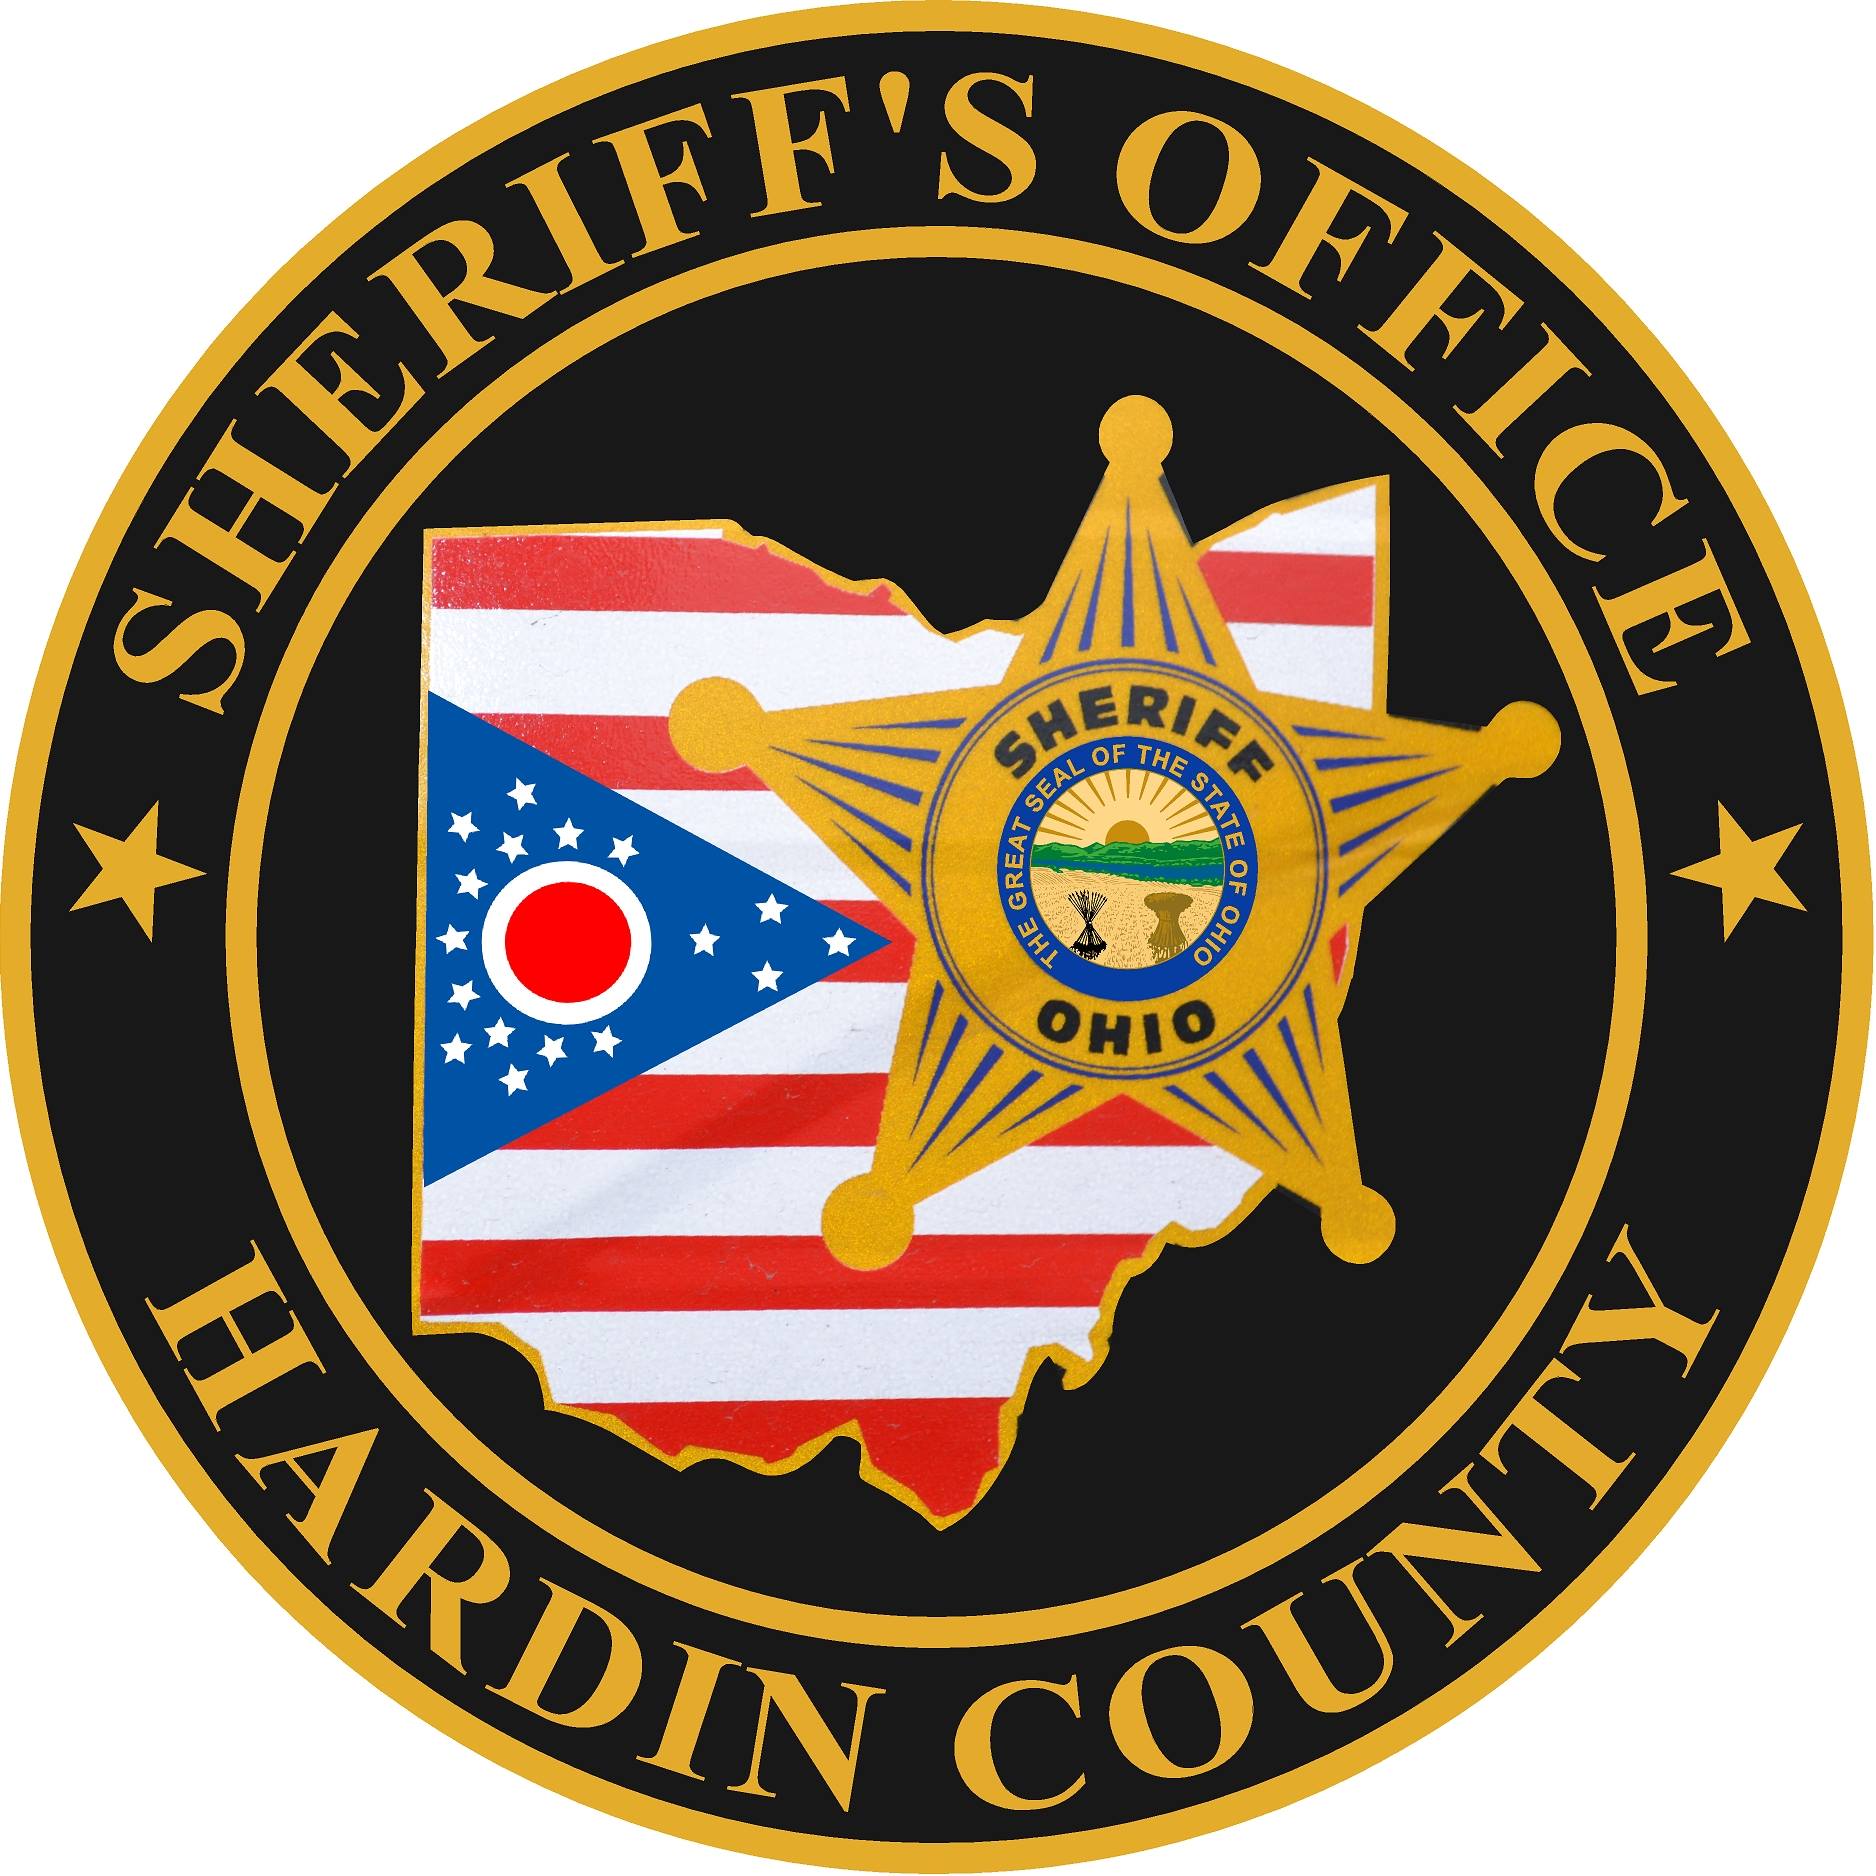 HARDIN COUNTY CRIME TASK FORCE logo